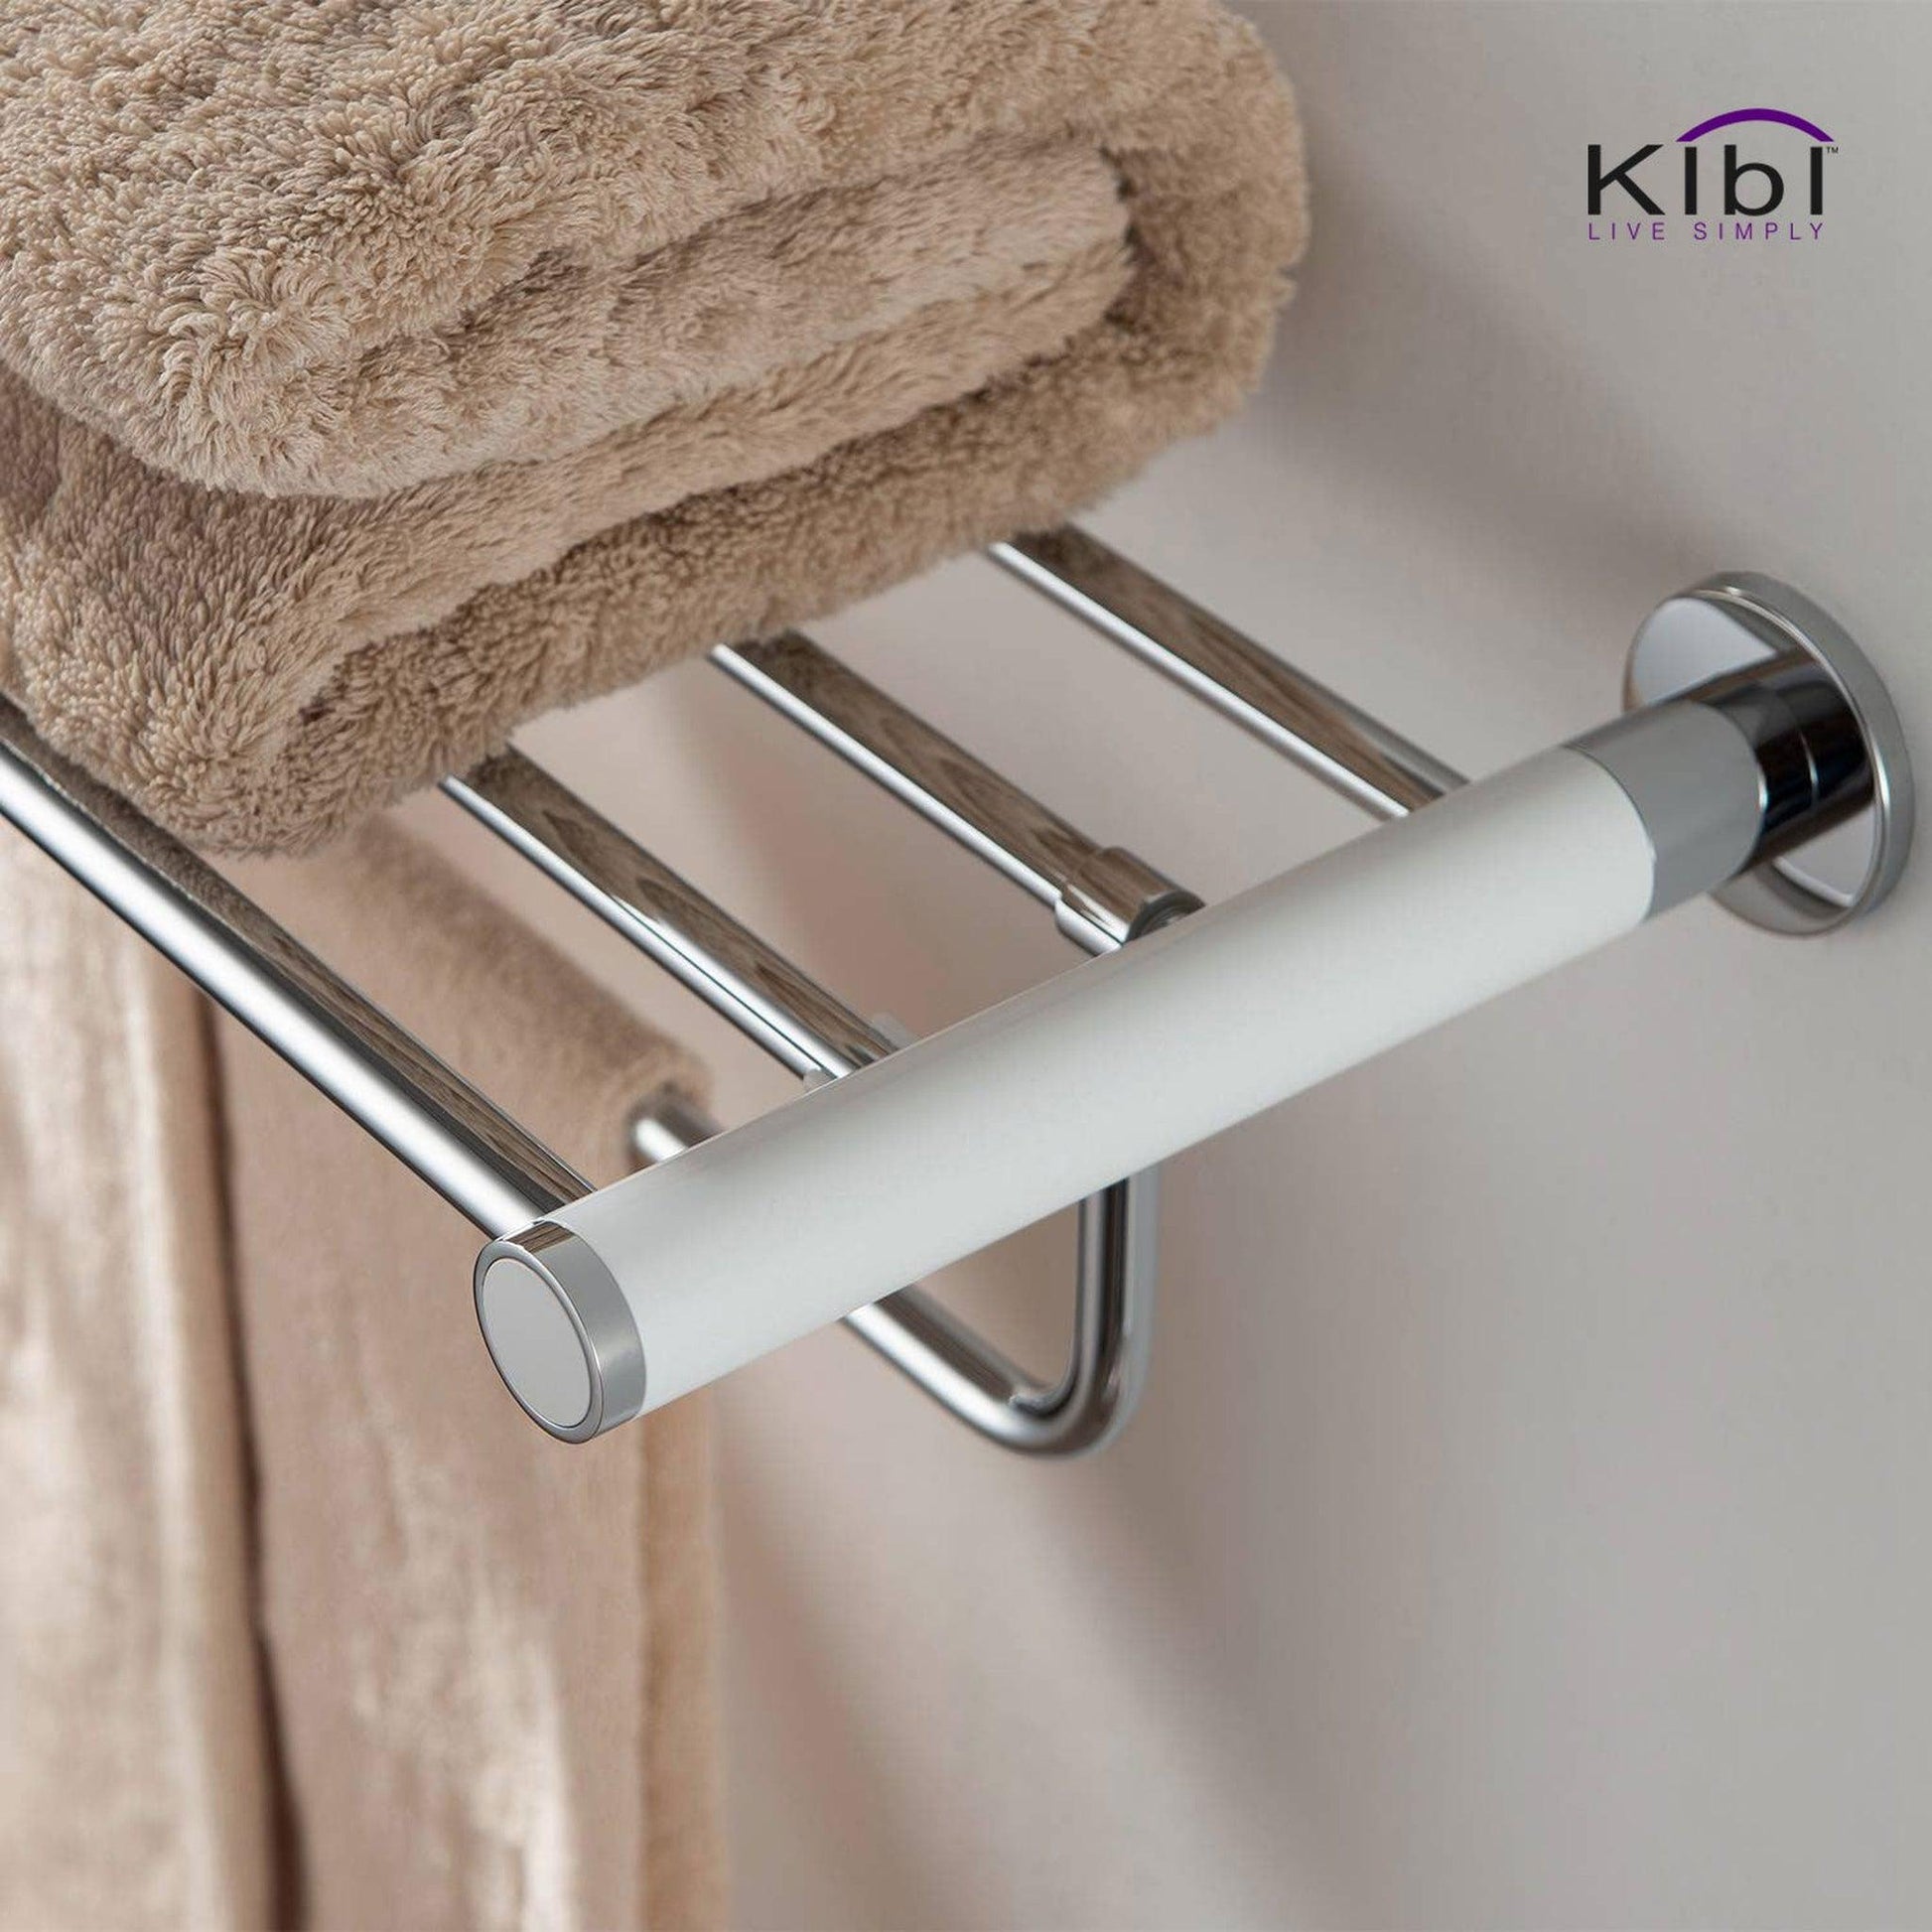 KIBI Abaco Towel Rack in Chrome White Finish